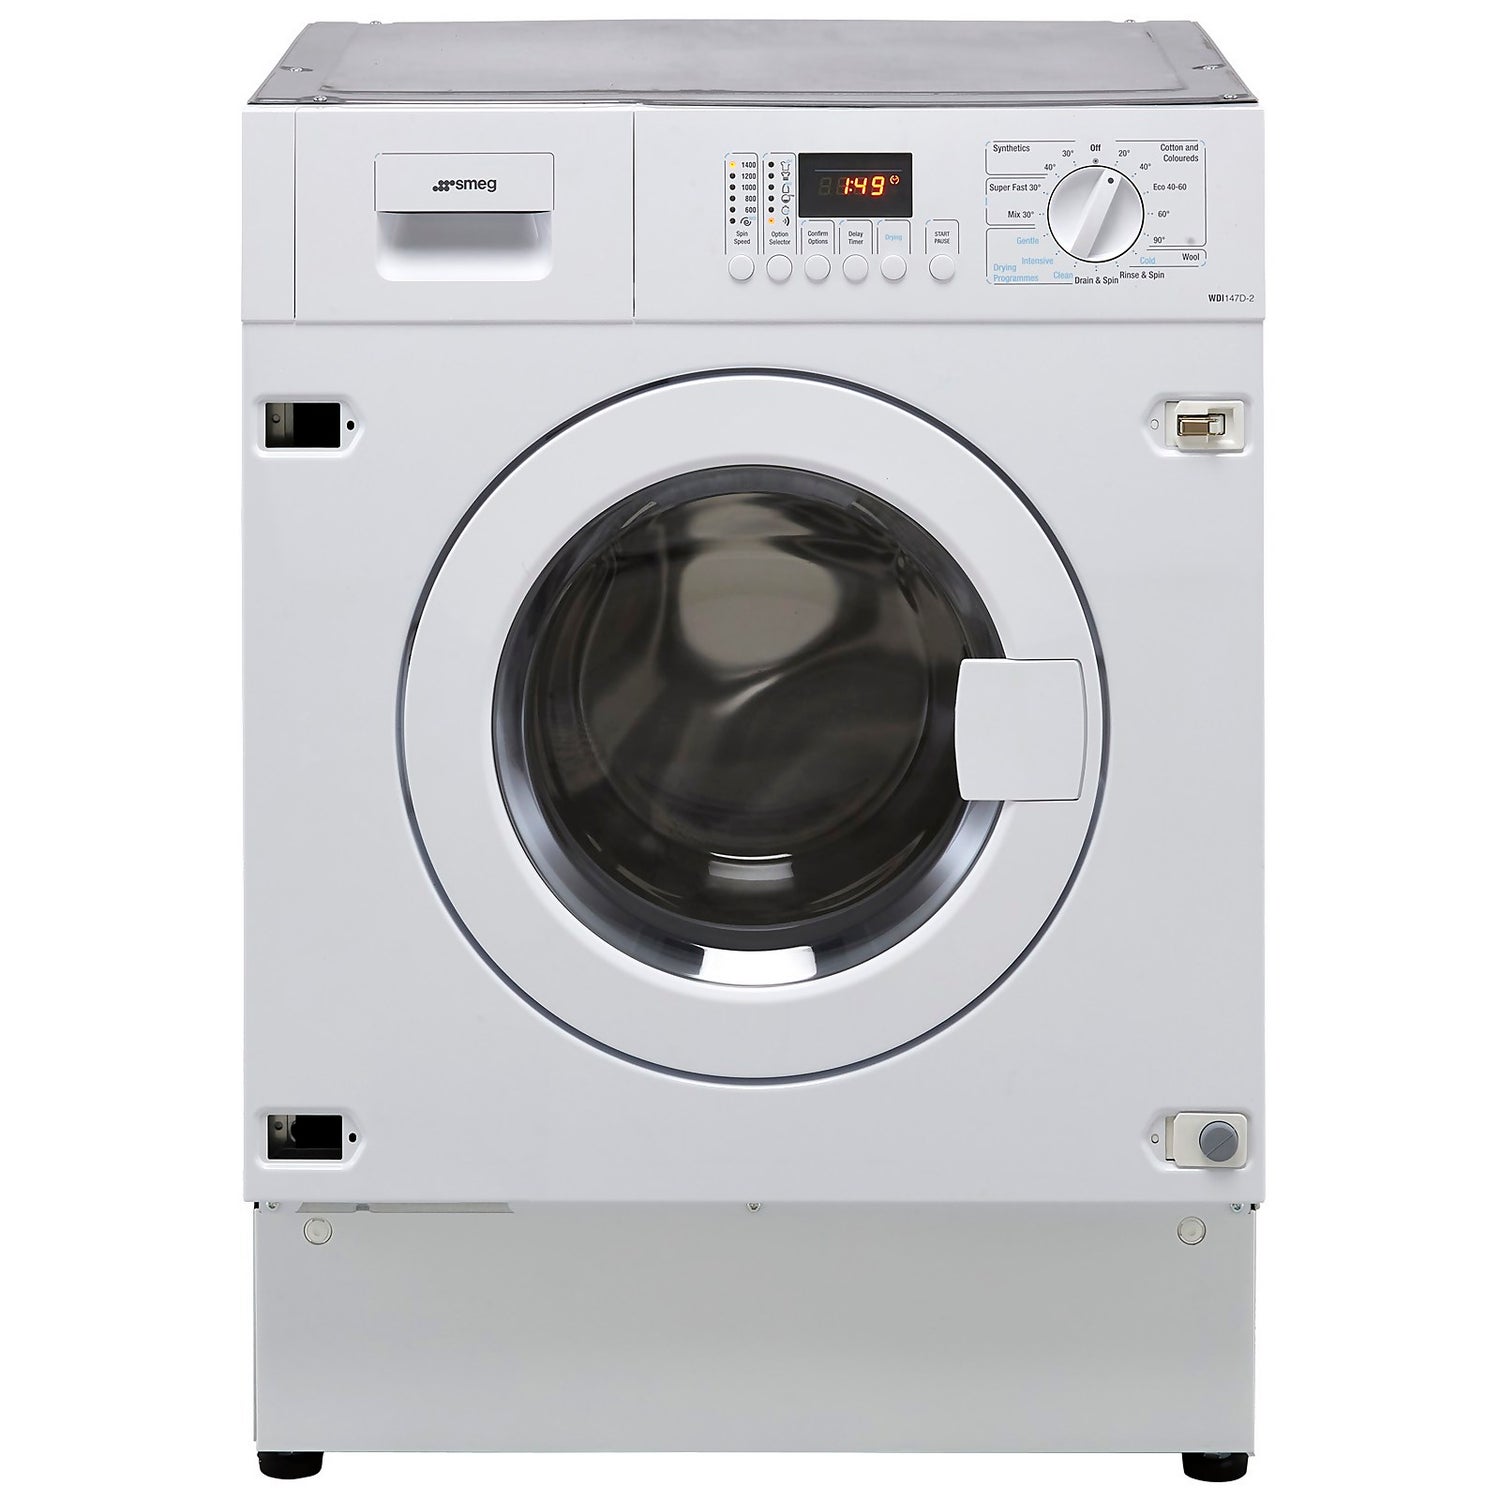 Стиральная машина бош series 4. WTF 2000 Bosch стиральная машина. Bosch washing Machines and Dryers, 8kg.